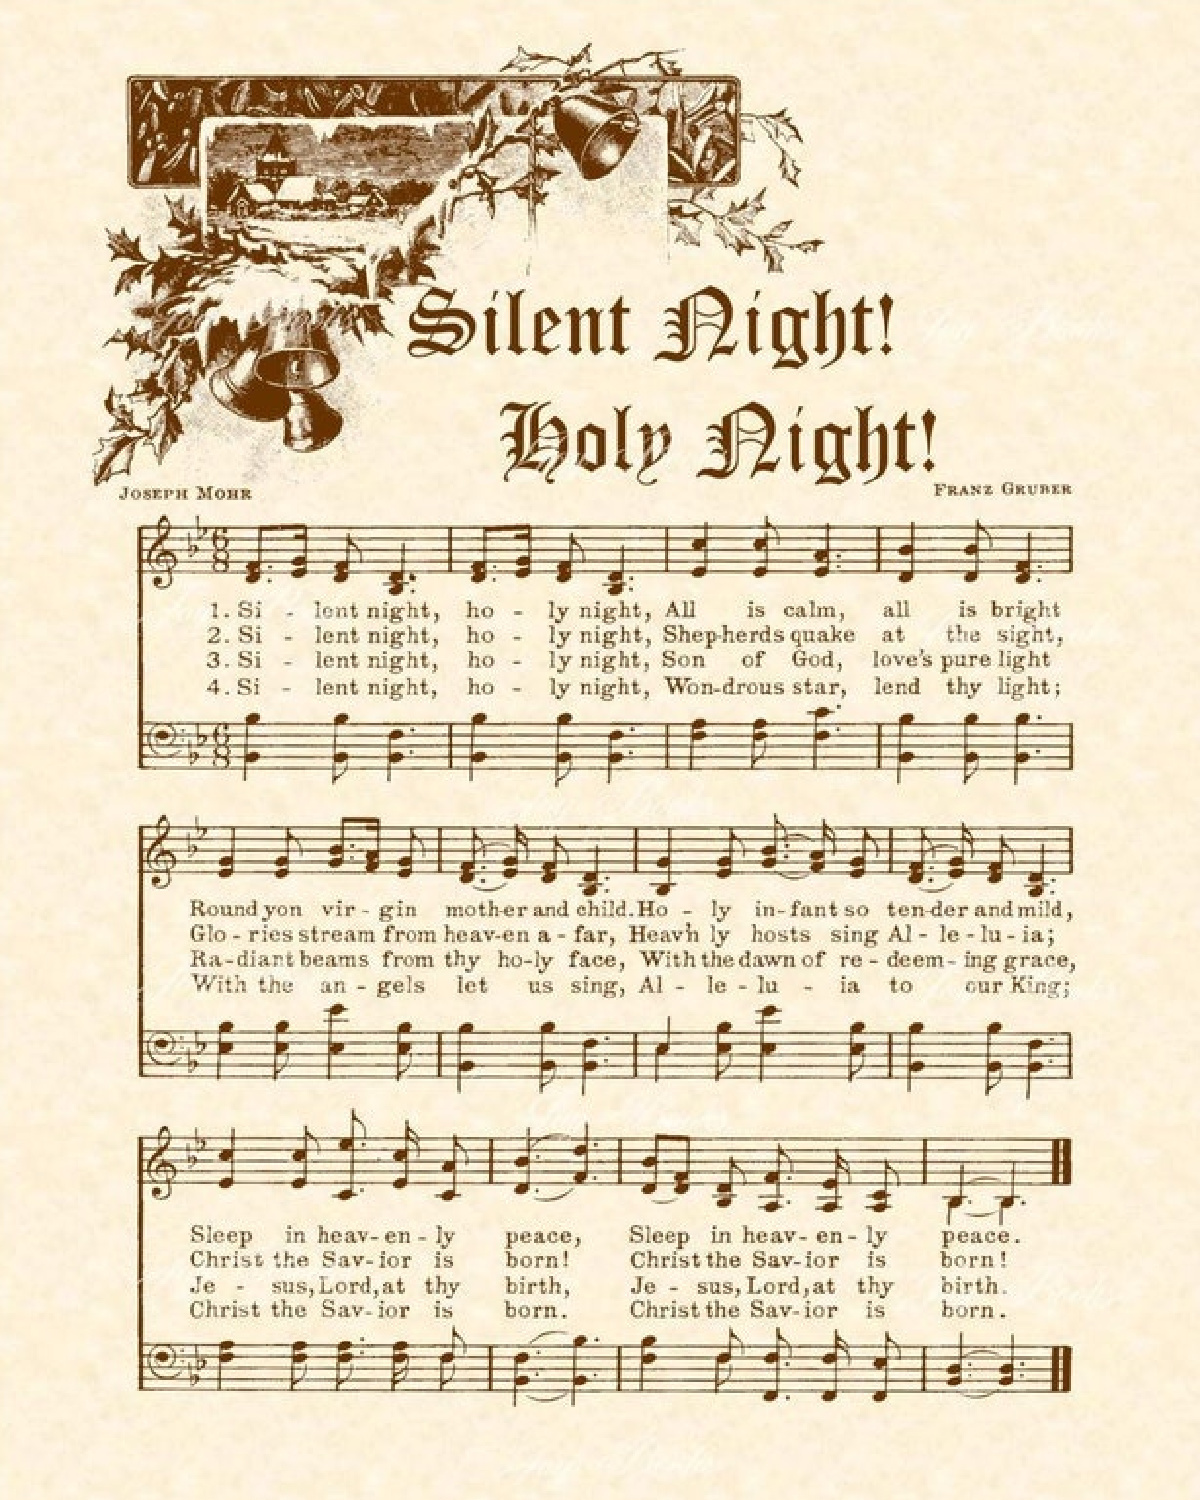 Vintage Silent Night sheet music to print and frame - Hello Lovely Studio. #sheetmusic #christmasdecor